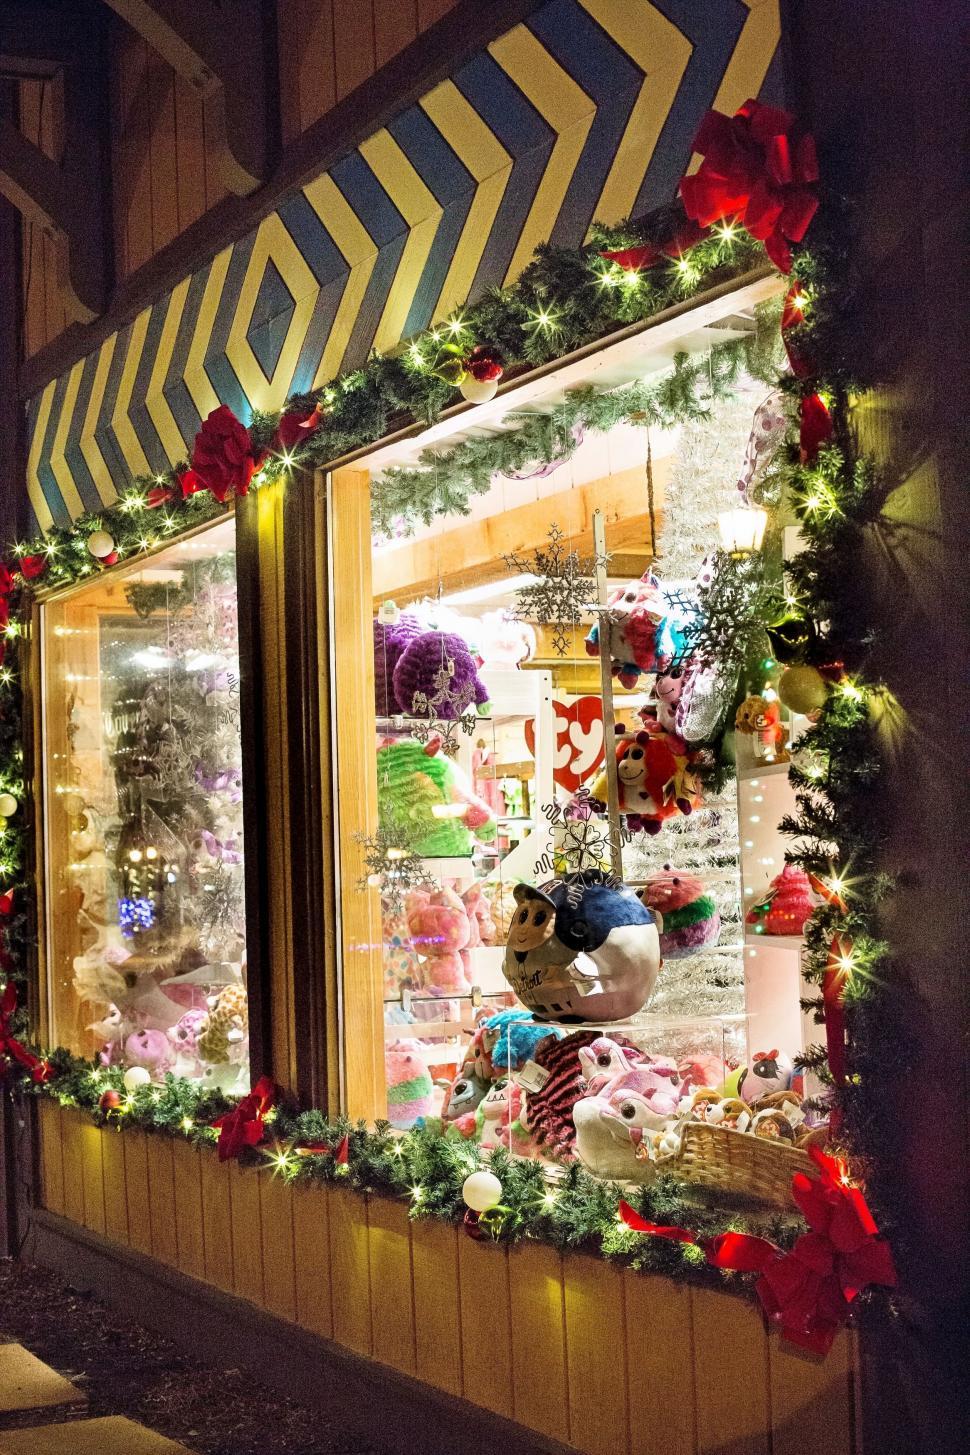 Free Image of Christmas Shop Window With Lights  